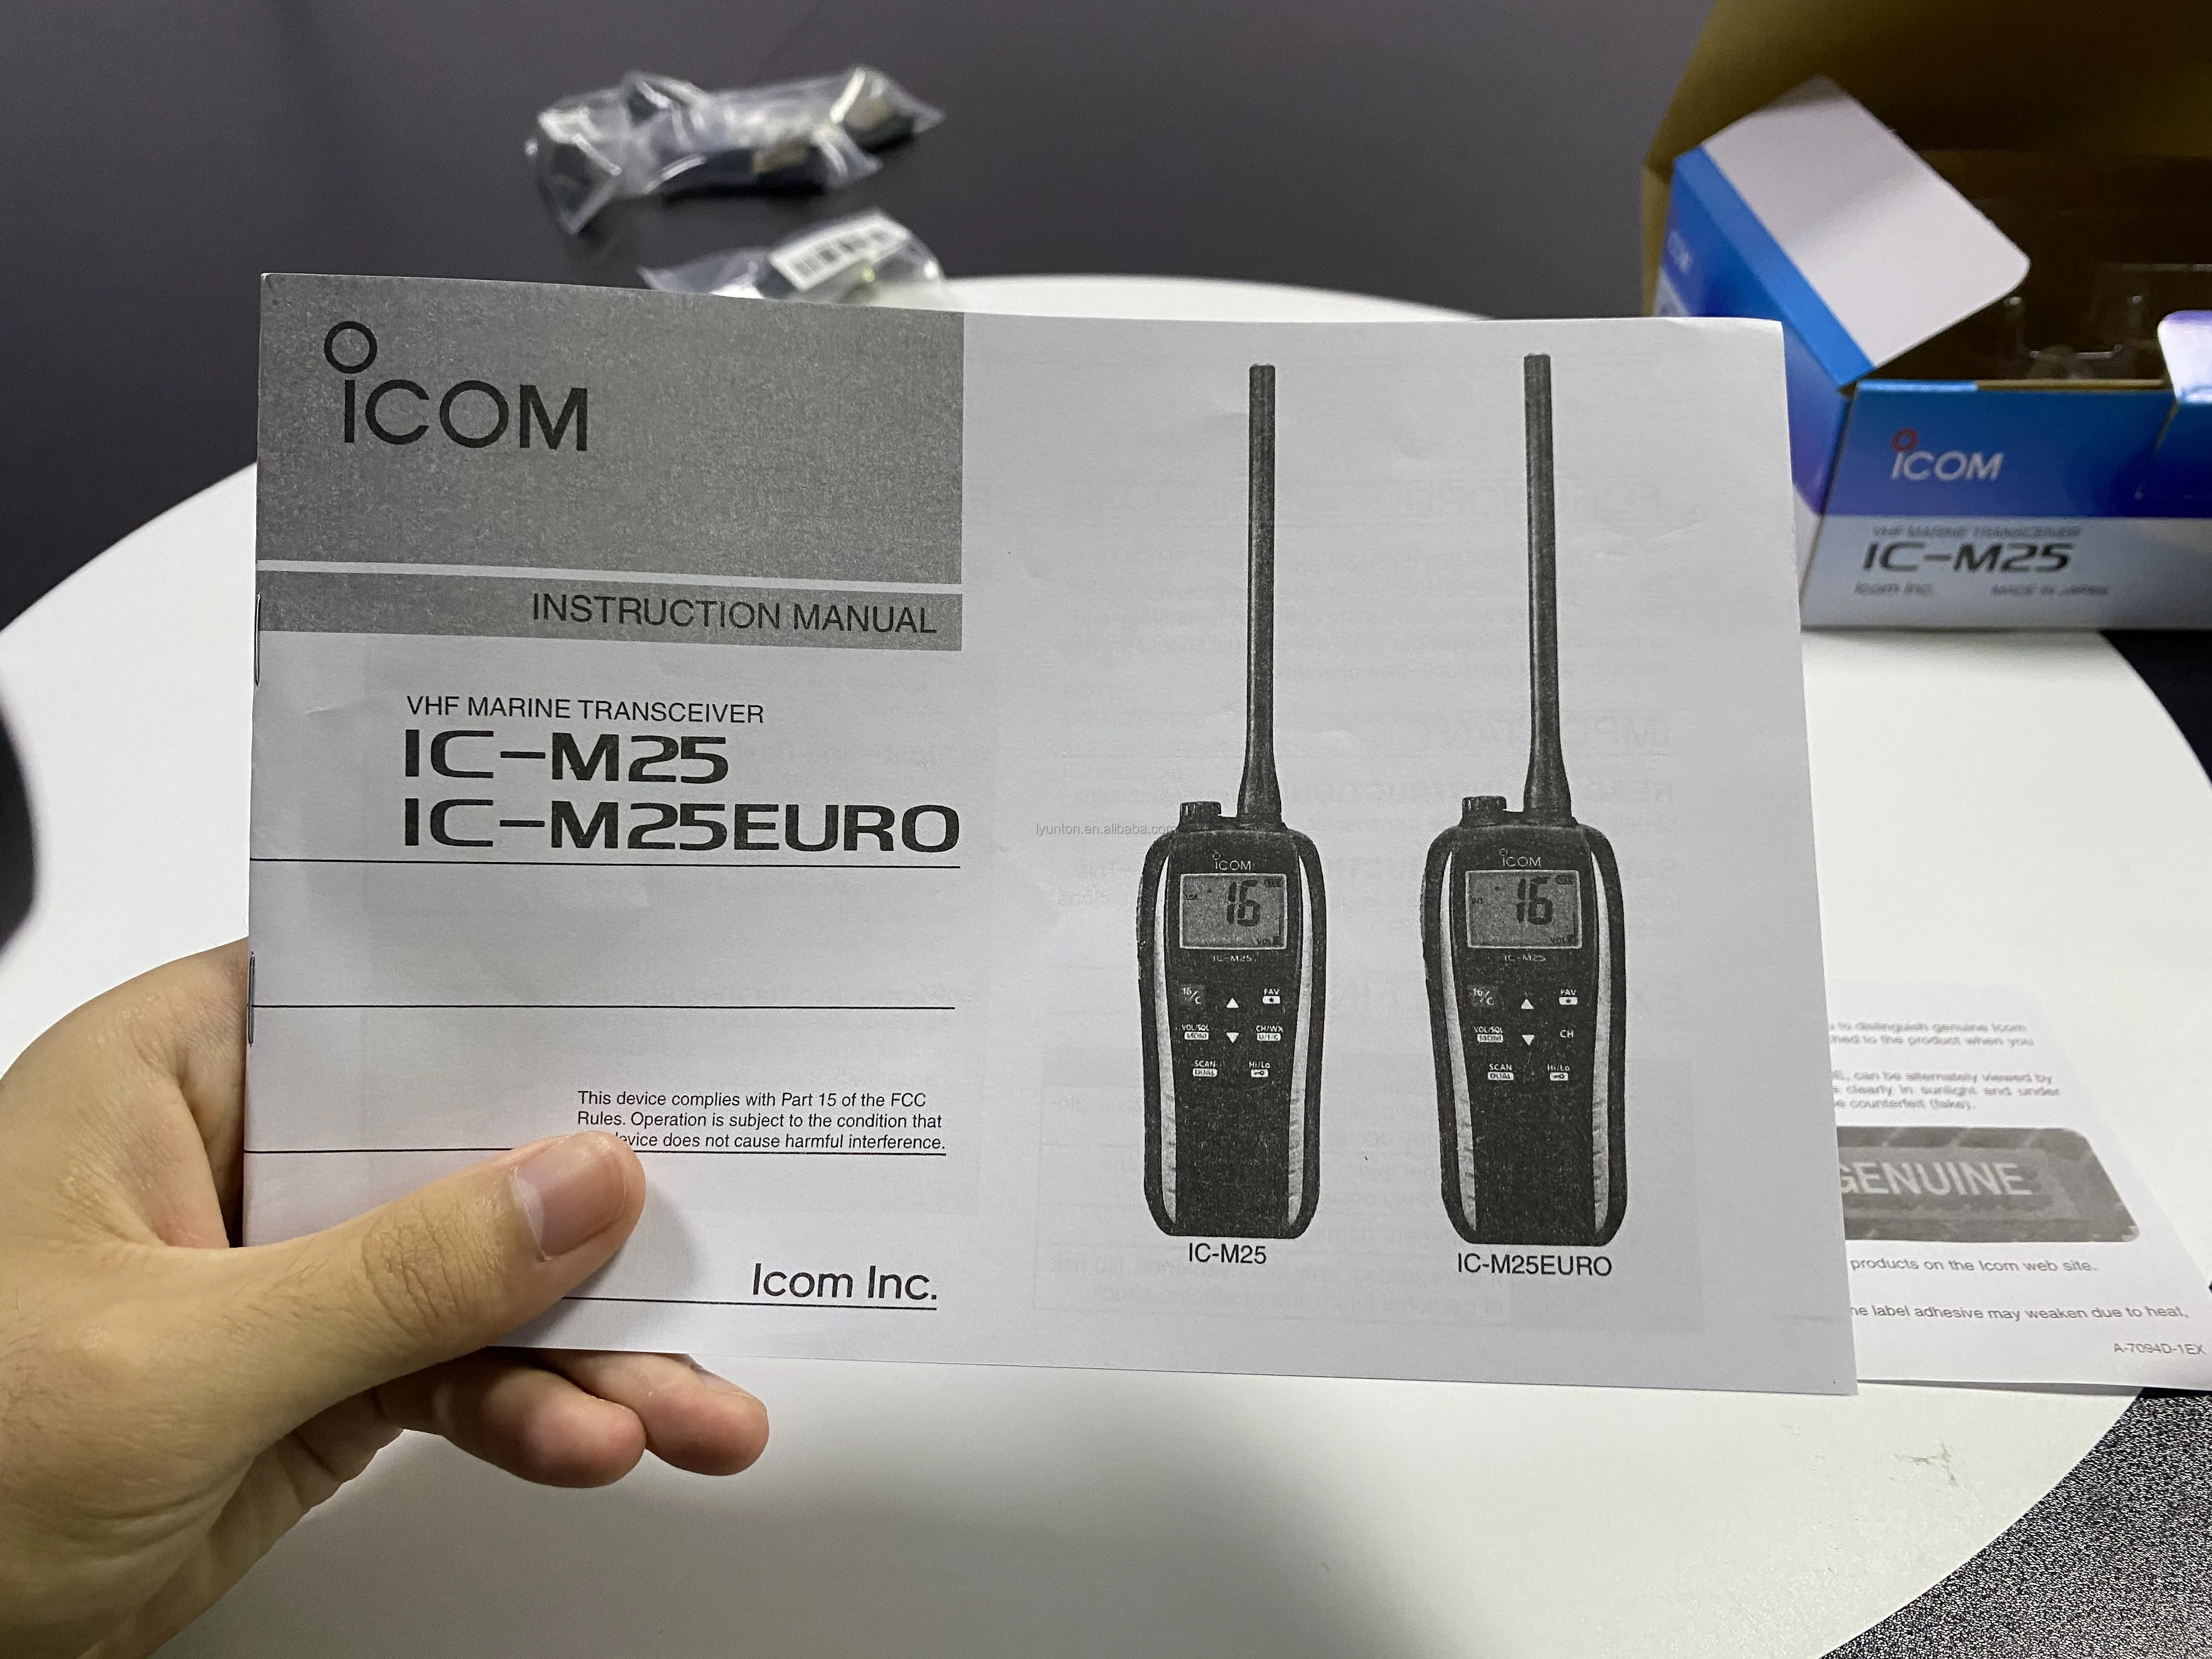 ICOM VHF MARINE TRANSCEIVER IC-M25 USB Charing IPX7 waterproof walkie taklie